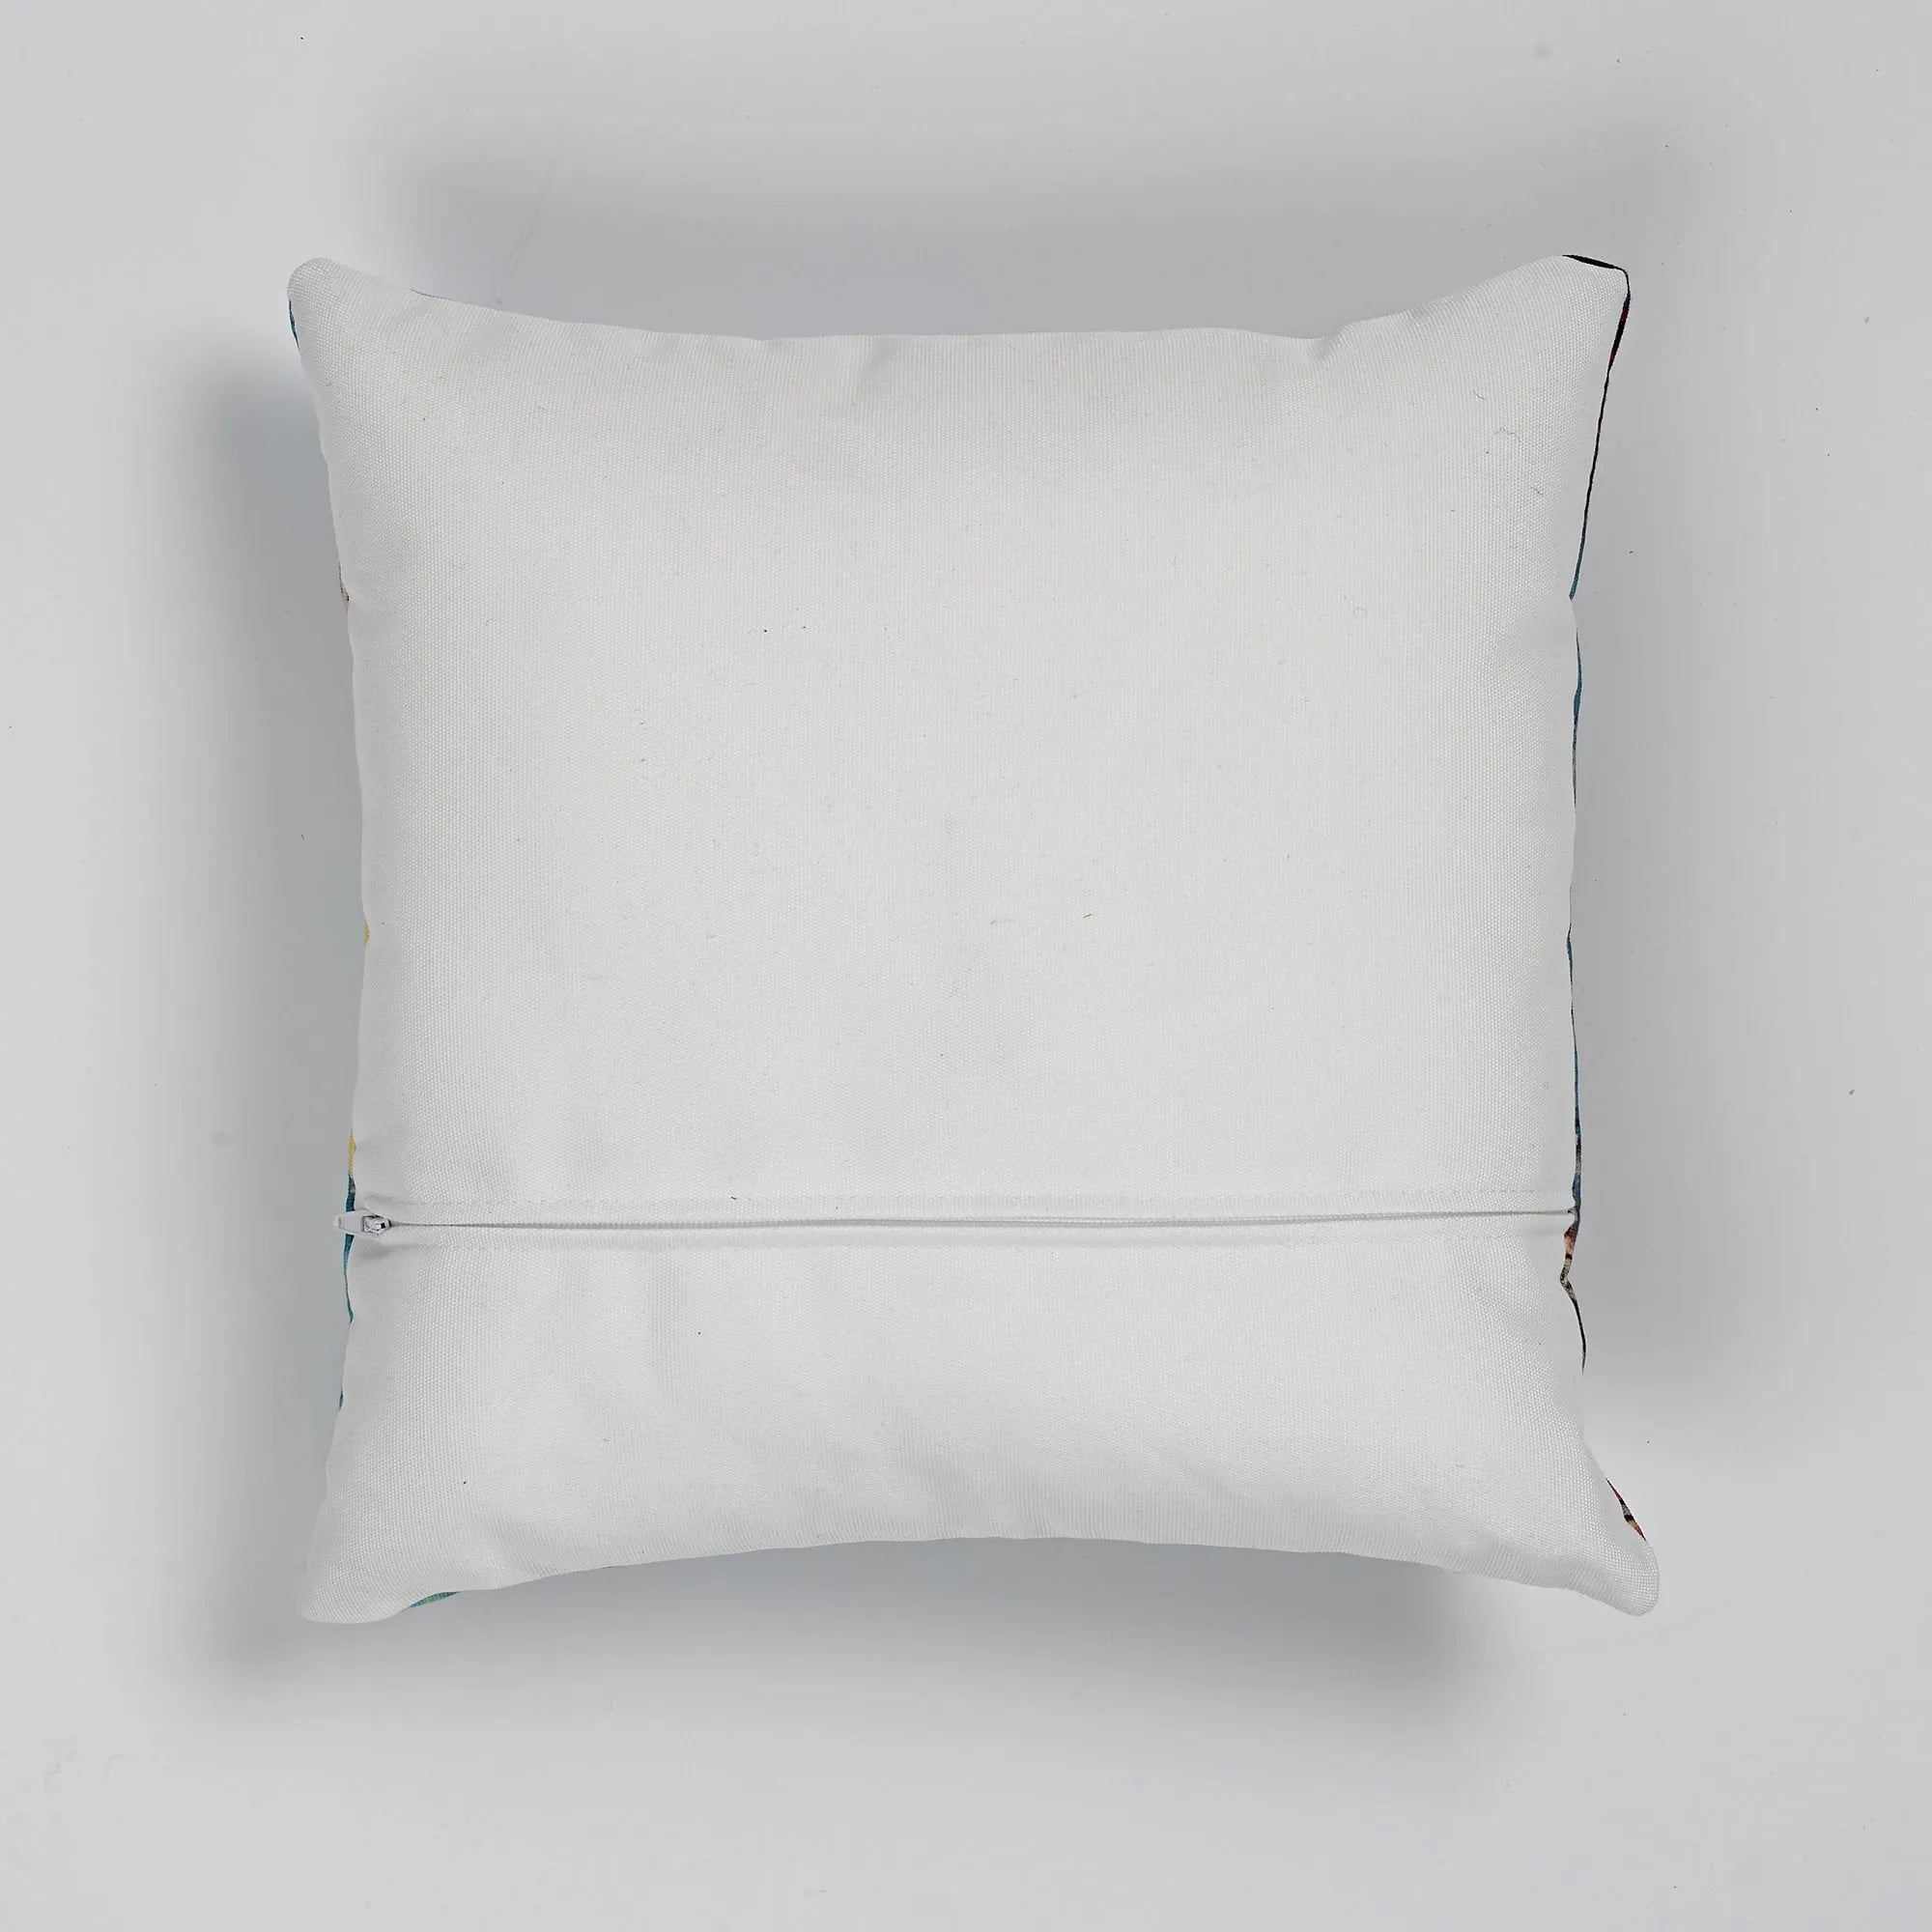 Medway - William Morris Cushion - Decorative Throw Pillow - Throw Pillows - Aesthetic Art